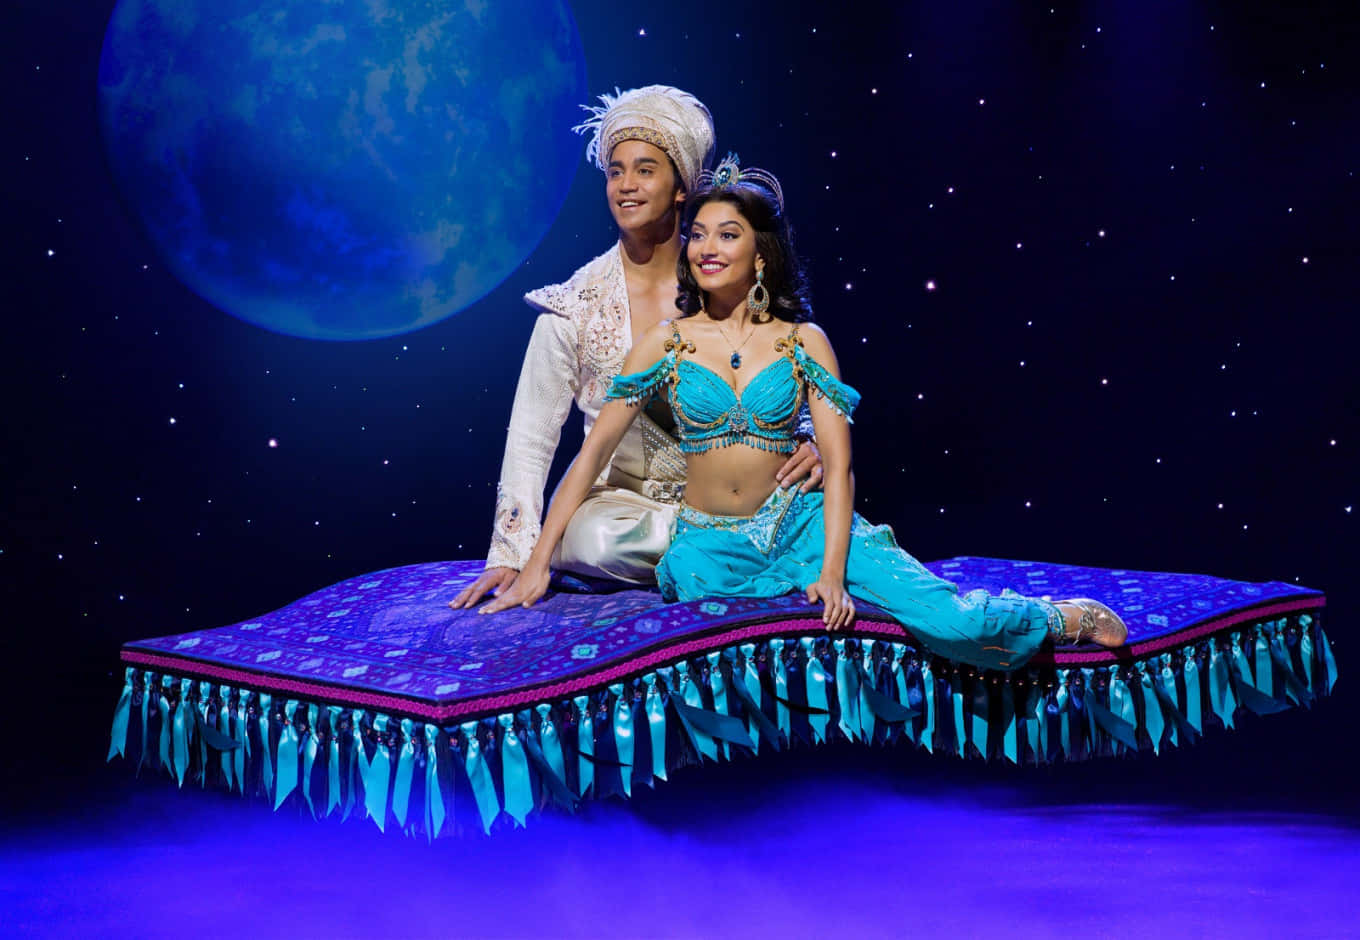 A scene from Aladdin, a classic Disney tale of adventure and romance